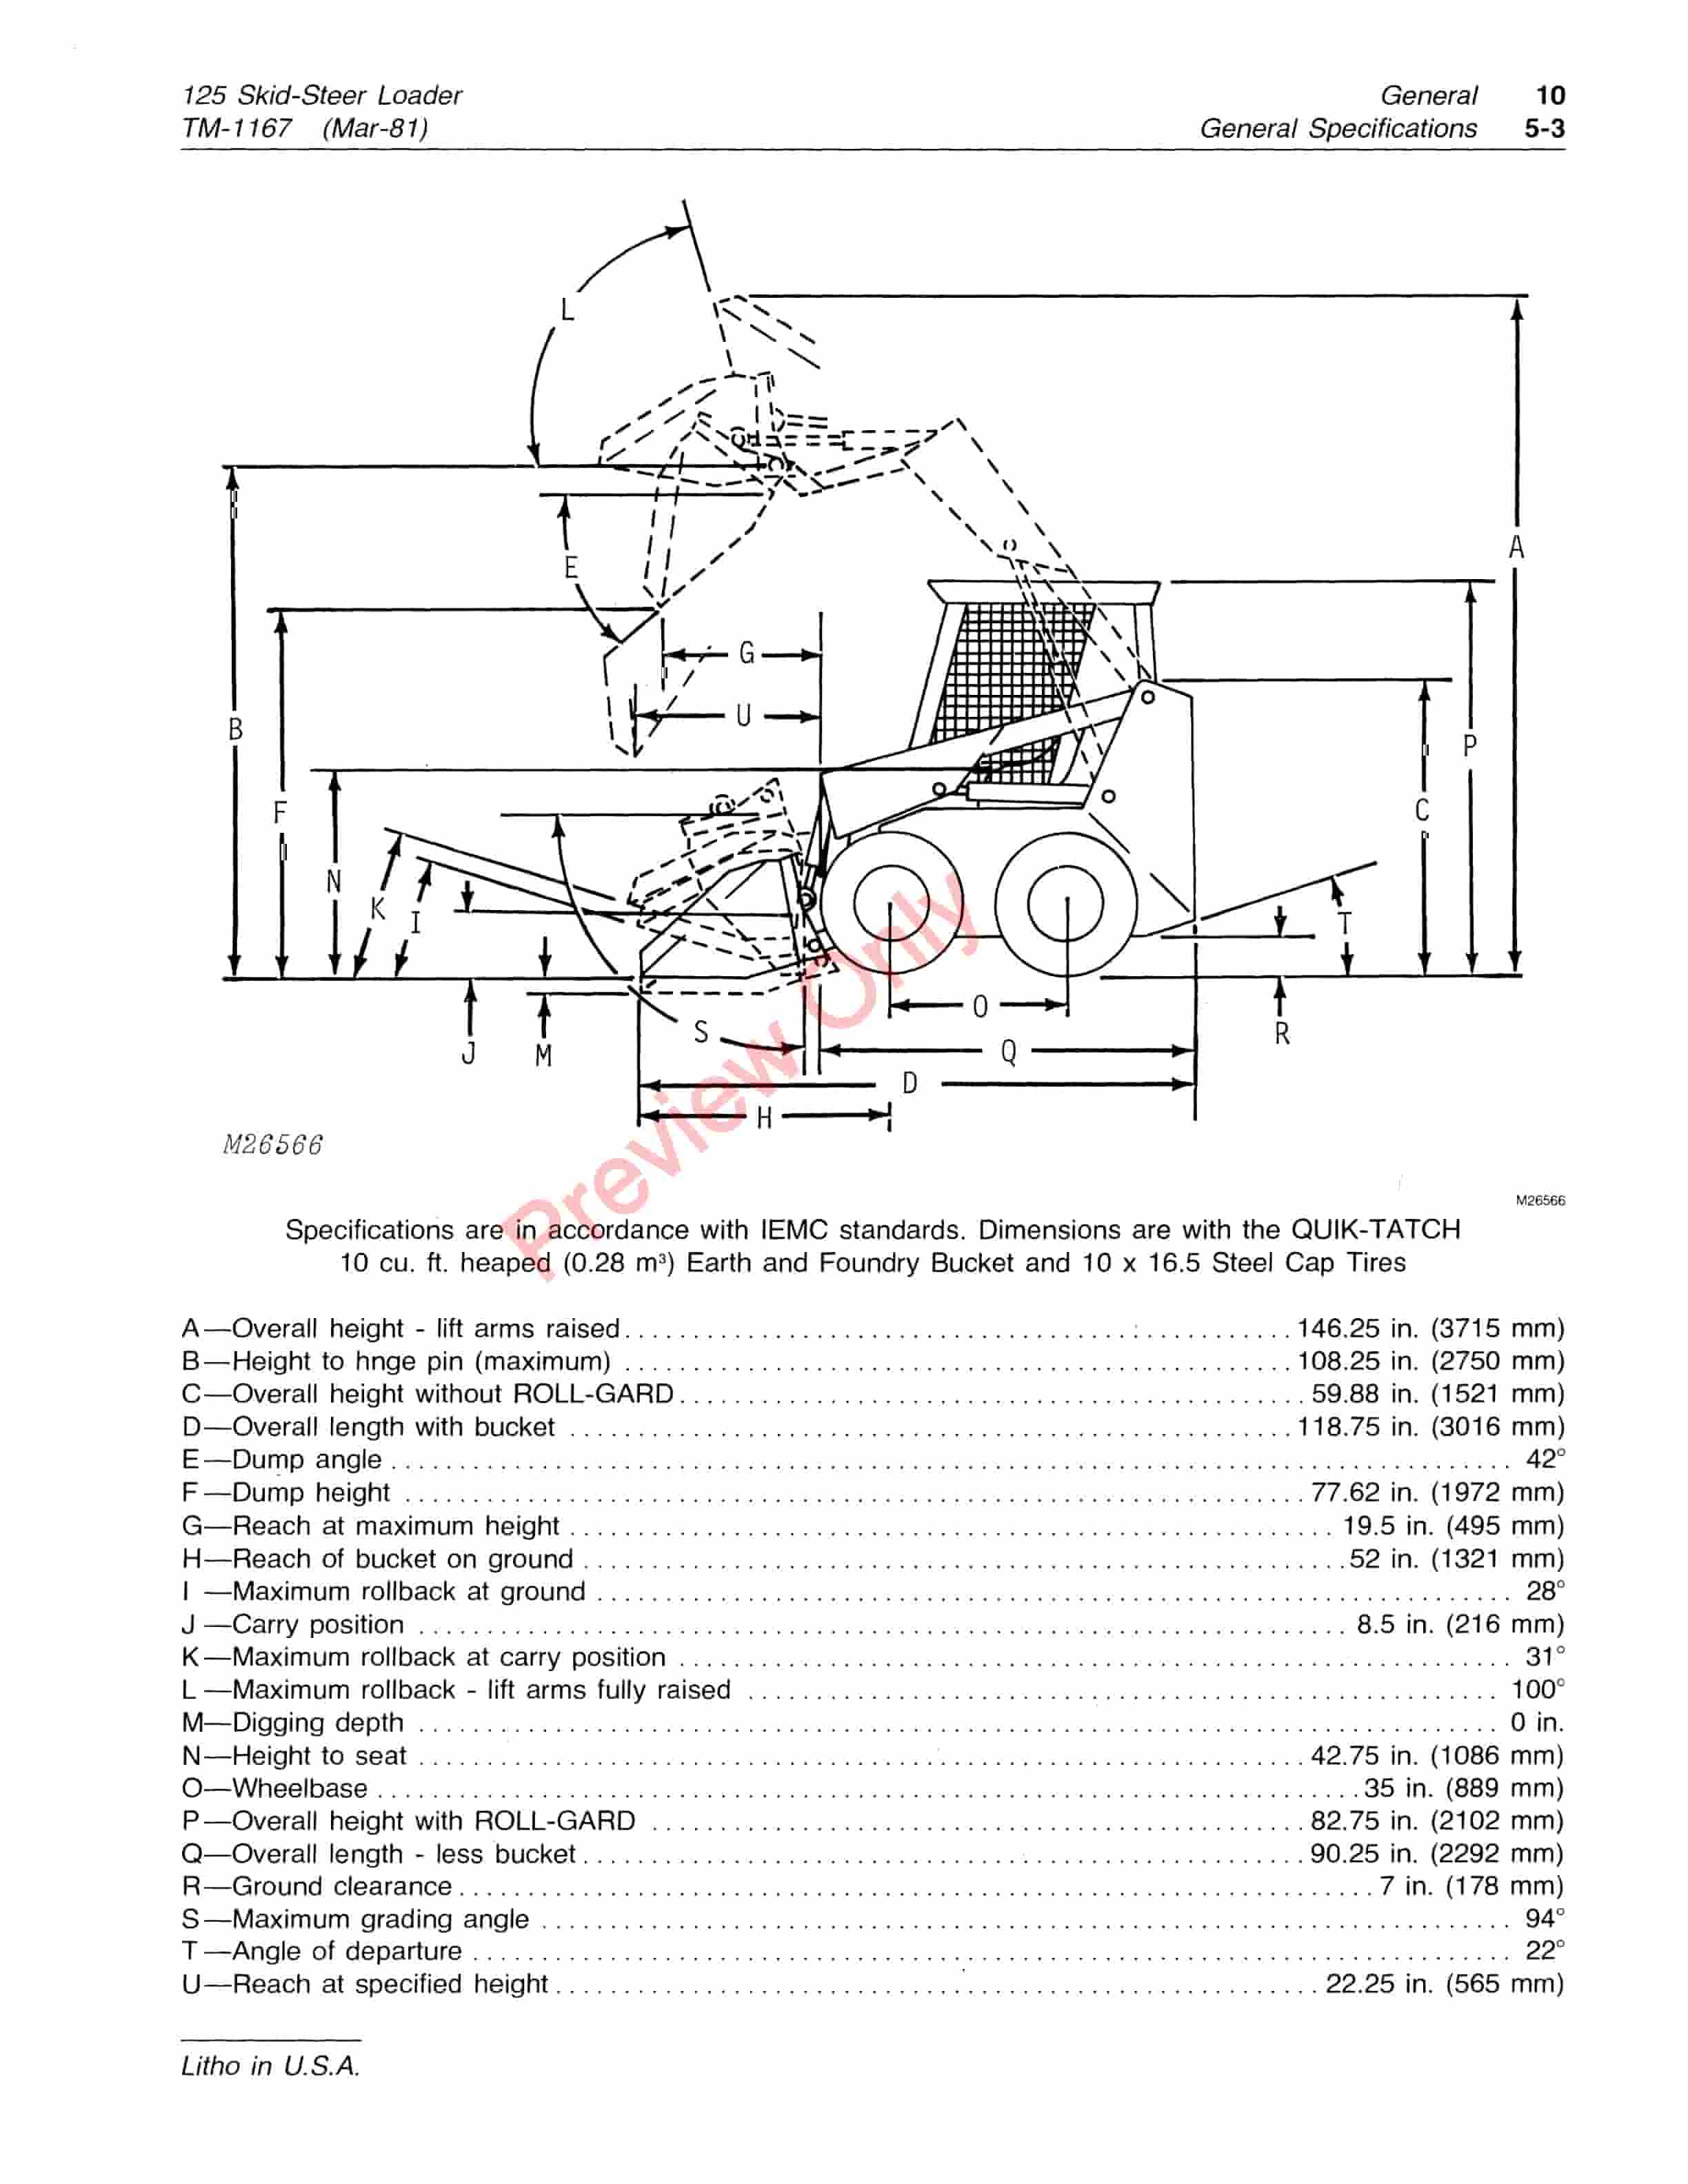 John Deere 125 Skid Steer Loader Technical Manual TM1167 01MAR81 5